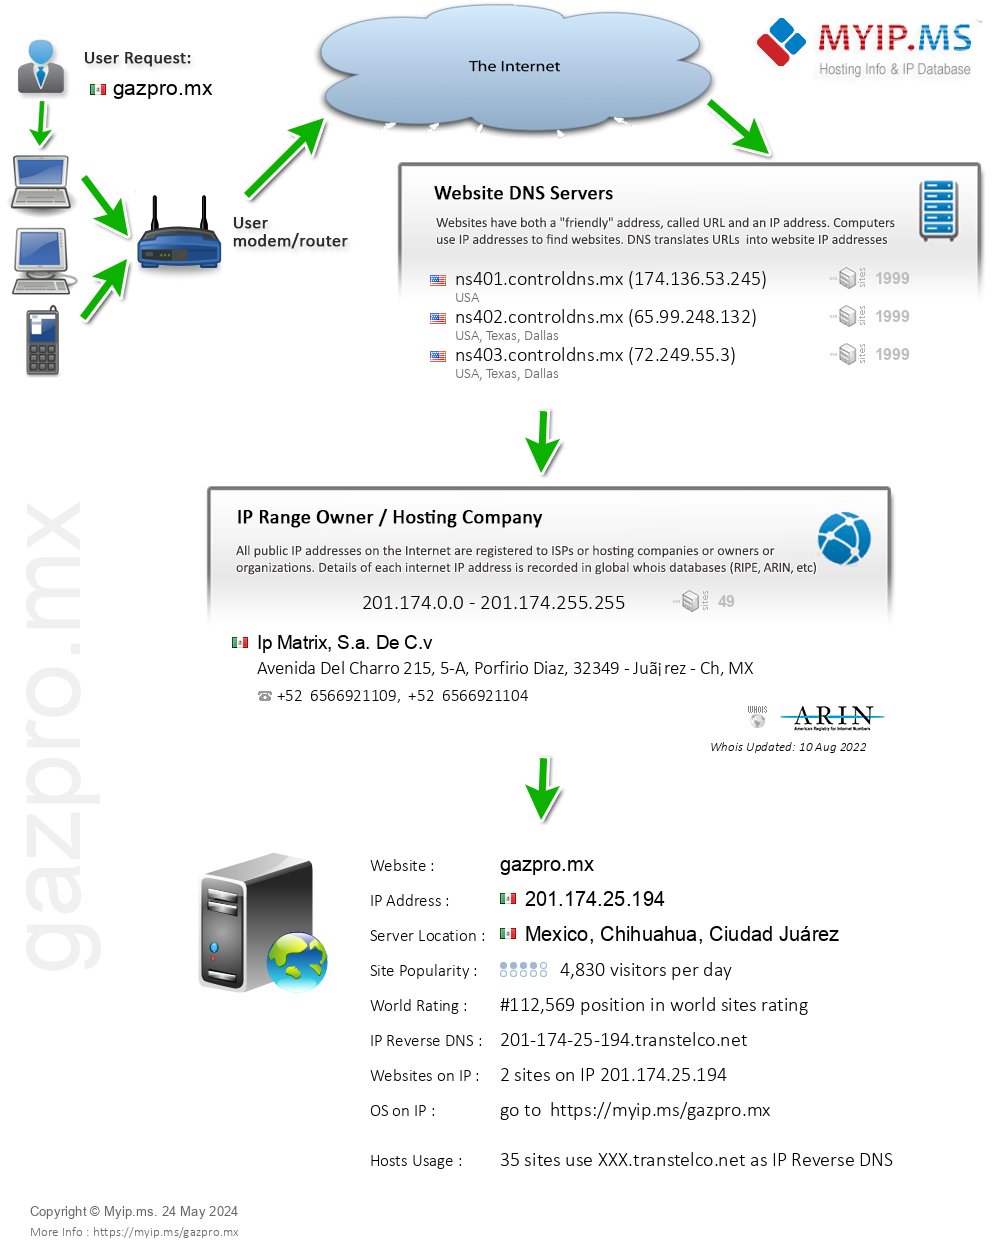 Gazpro.mx - Website Hosting Visual IP Diagram